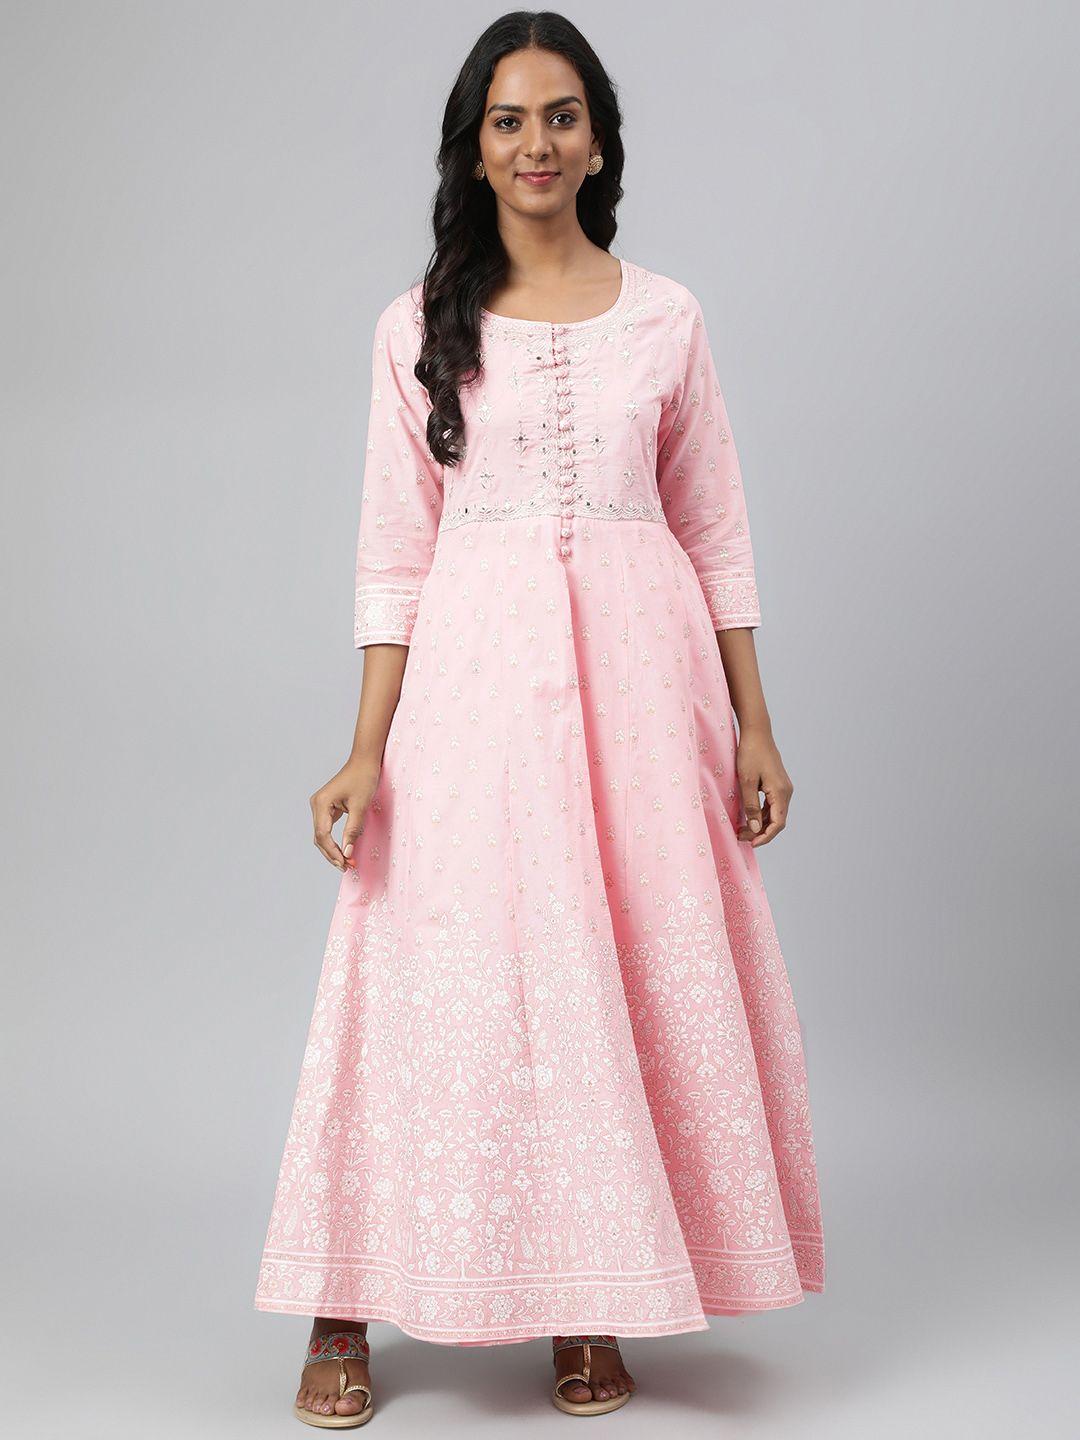 readiprint fashions women pink floral yoke design empire pure cotton kurta with palazzos